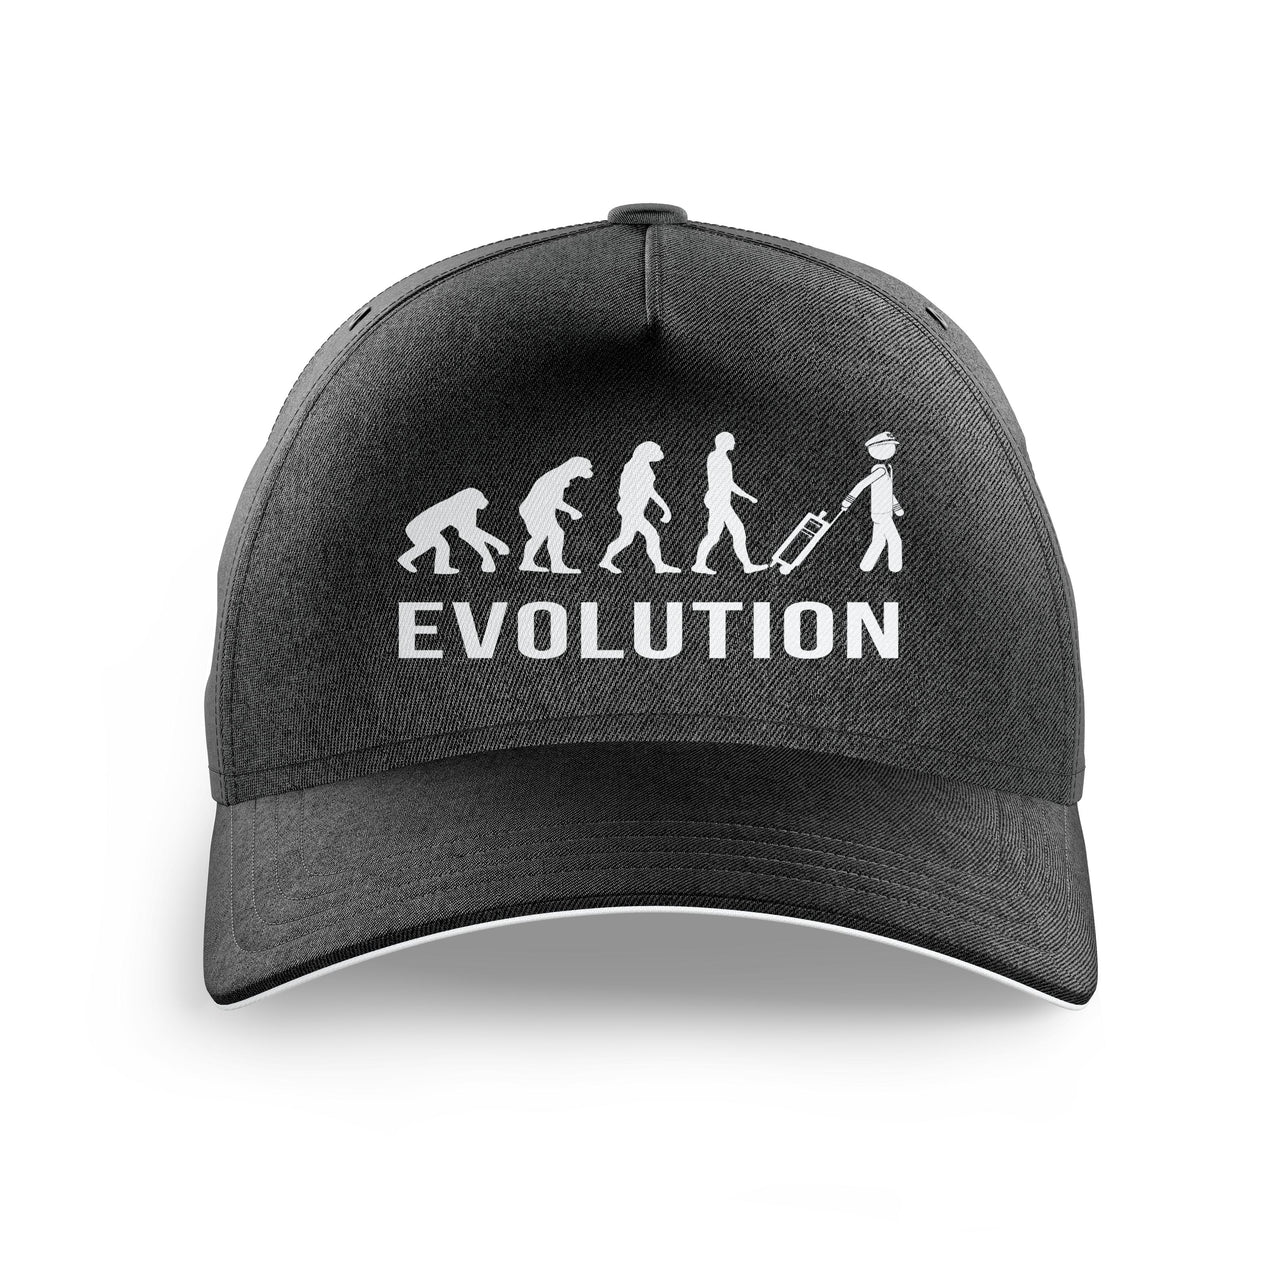 Pilot Evolution Printed Hats